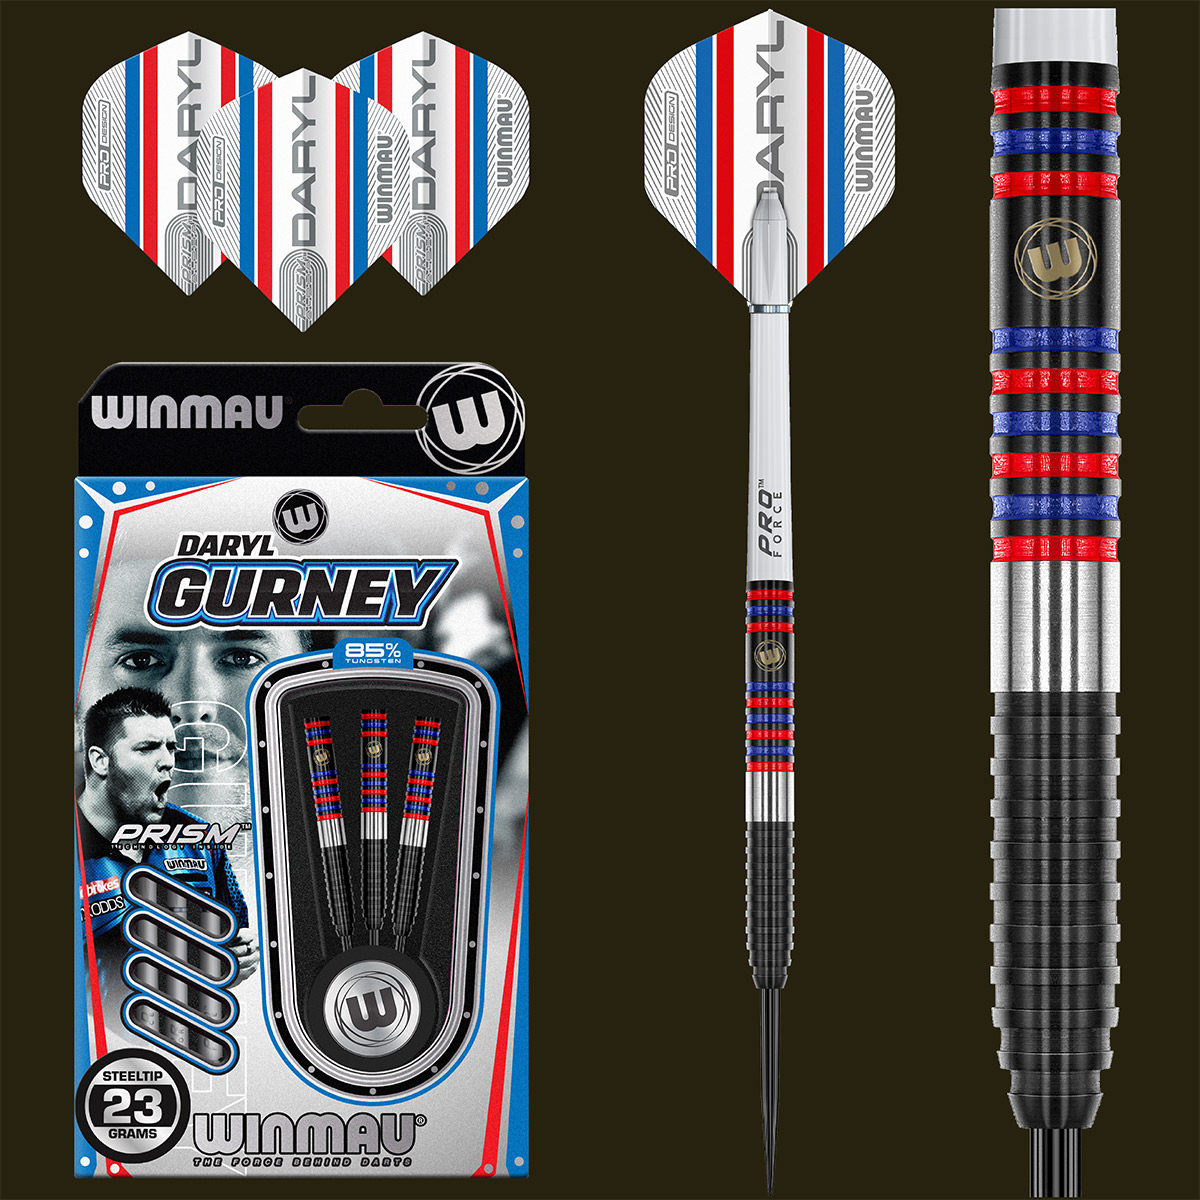 Daryl Gurney 85% Tungsten darts